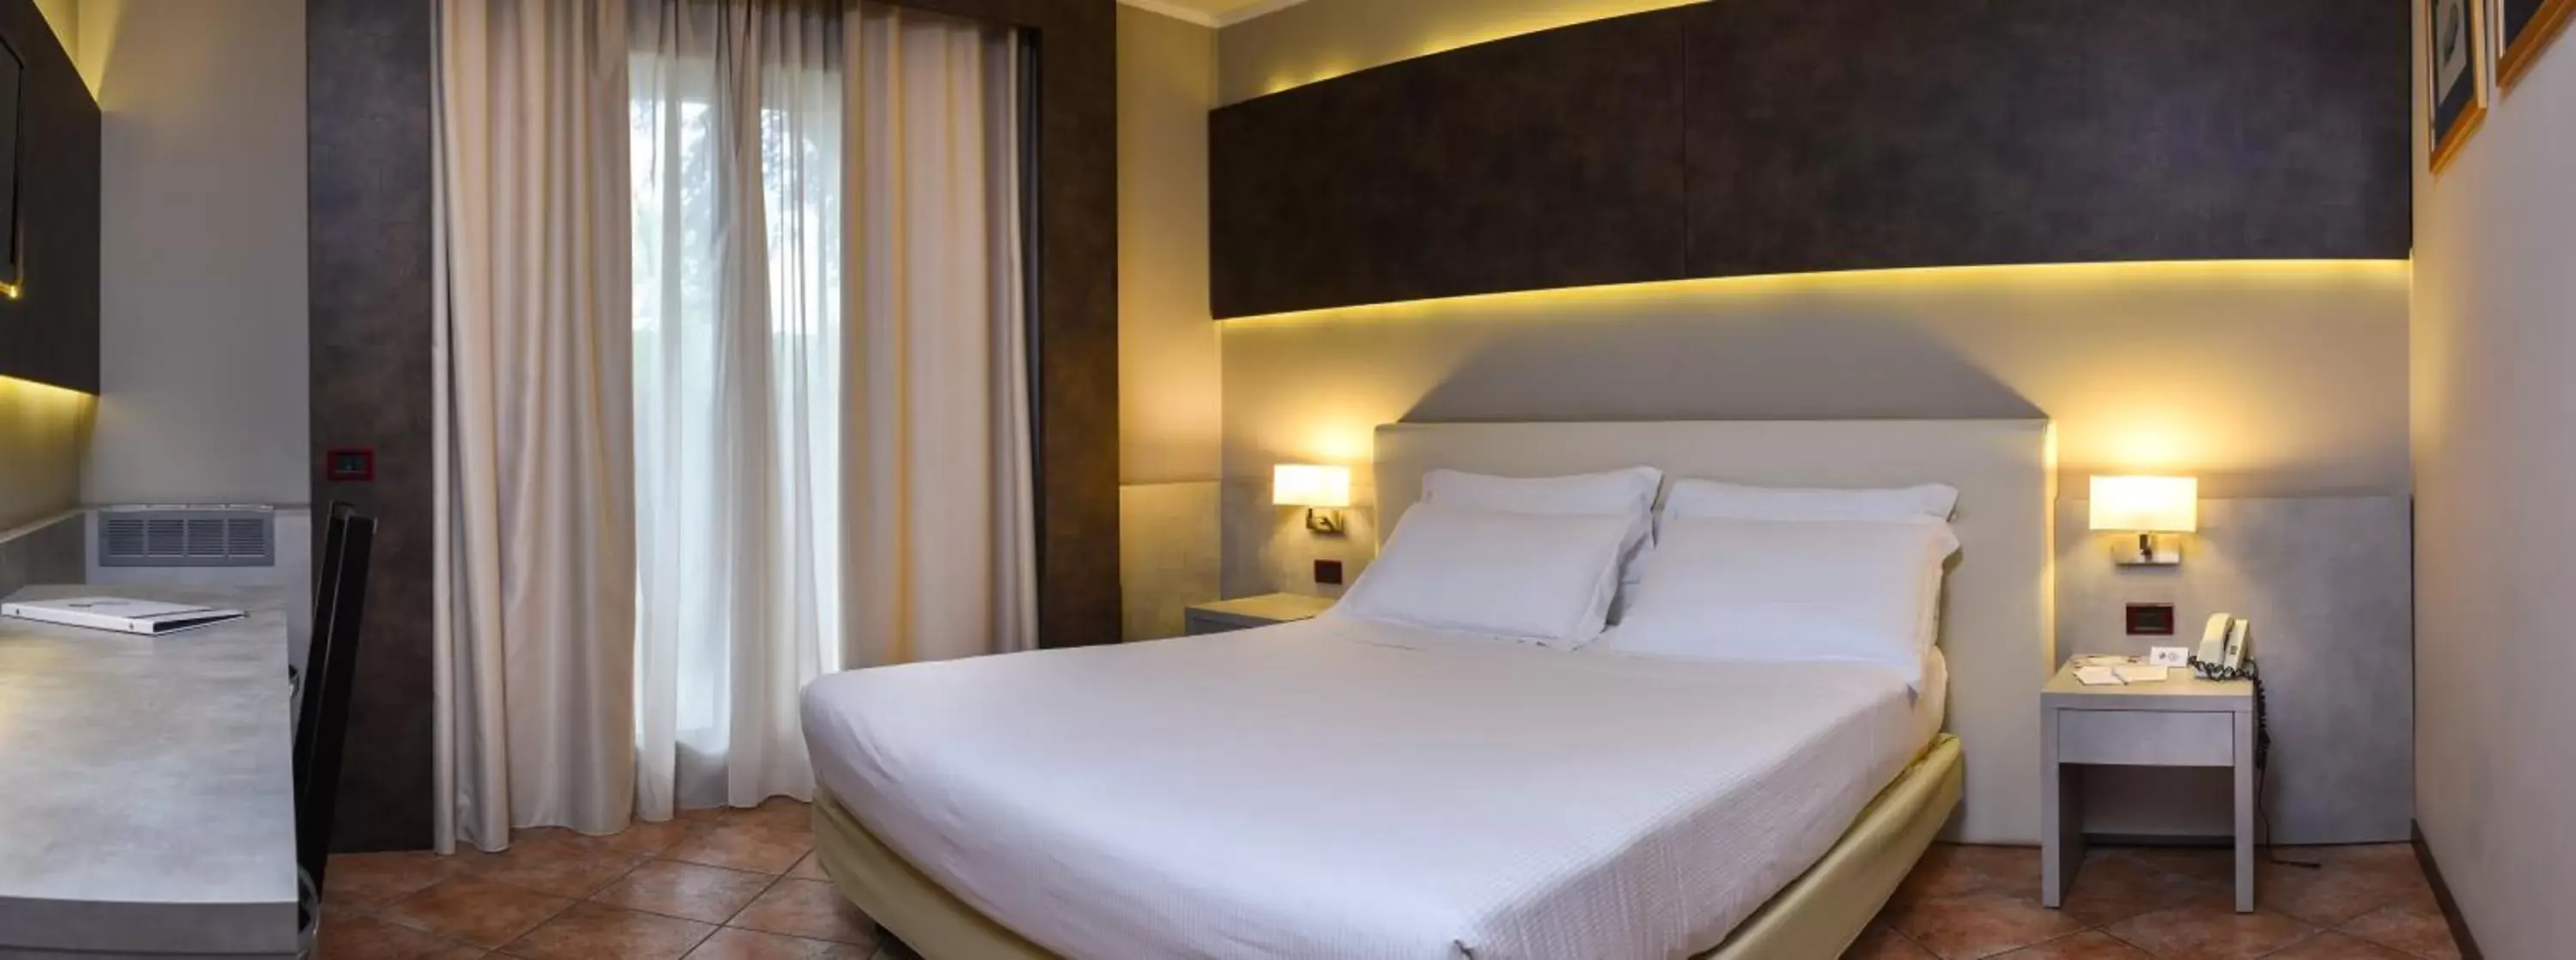 Bed in Best Western Plus Hotel Modena Resort